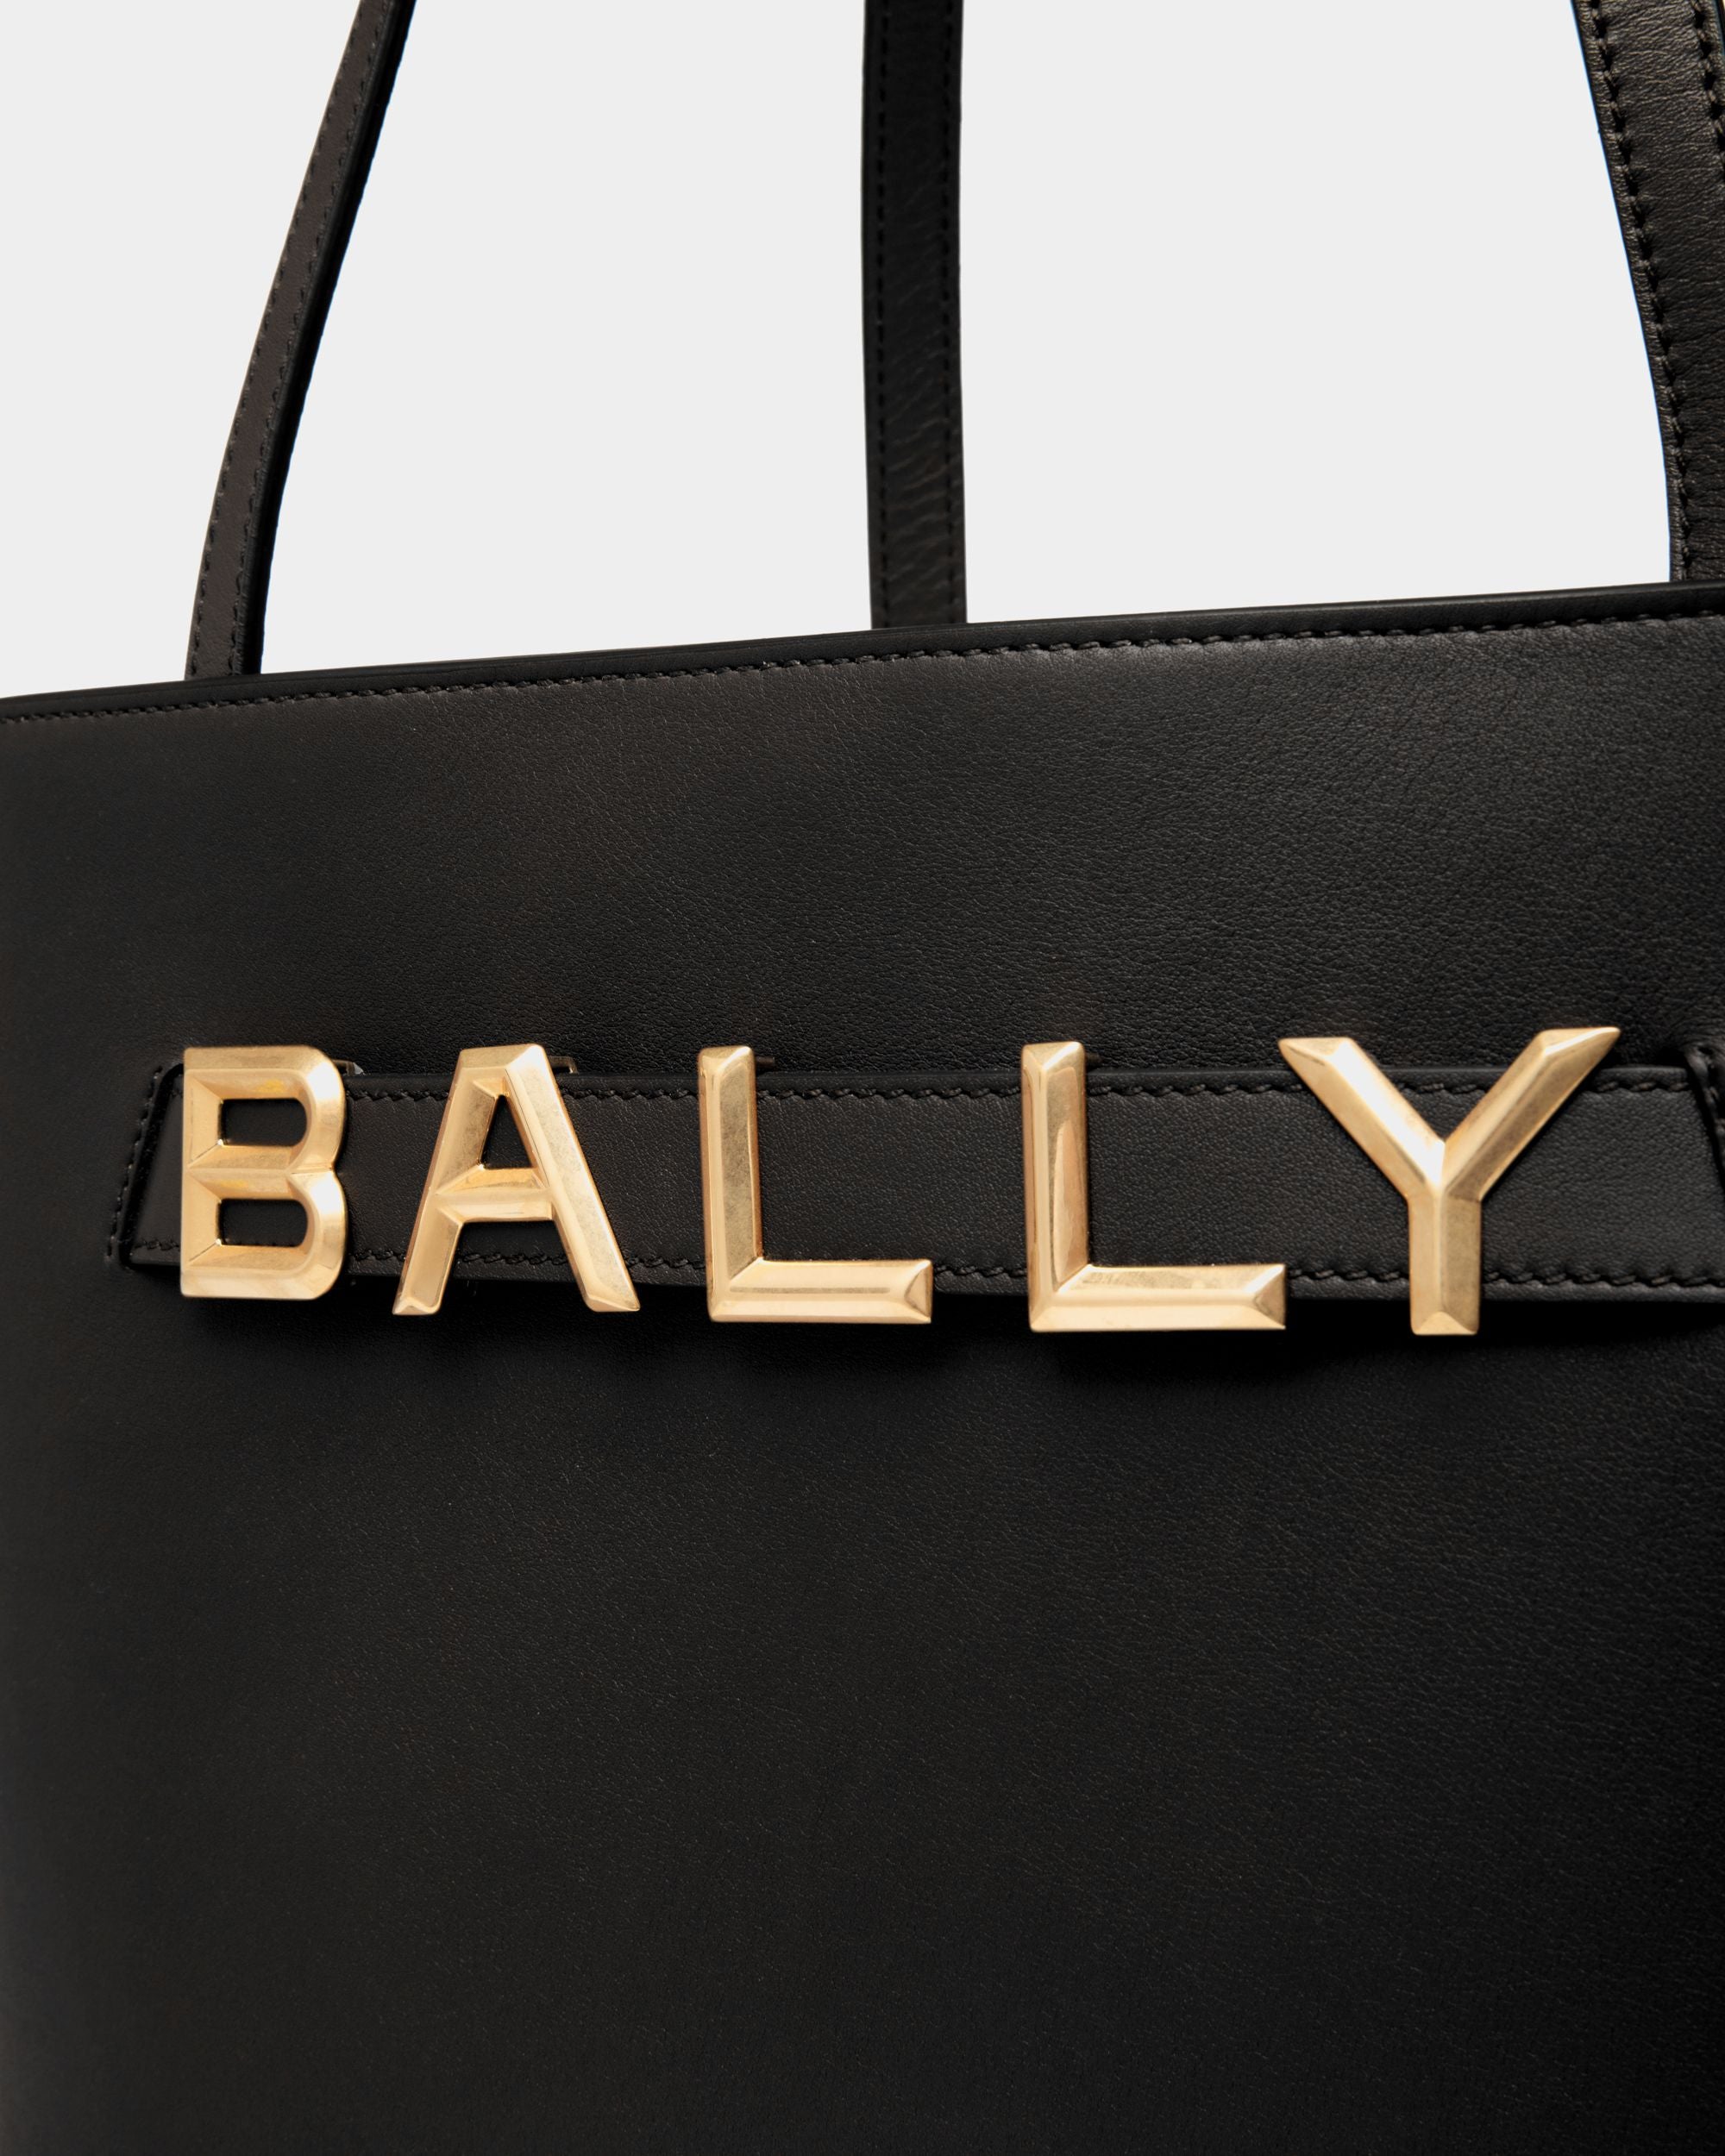 Bally Spell | Women's Tote Bag in Black Leather | Bally | Still Life Detail